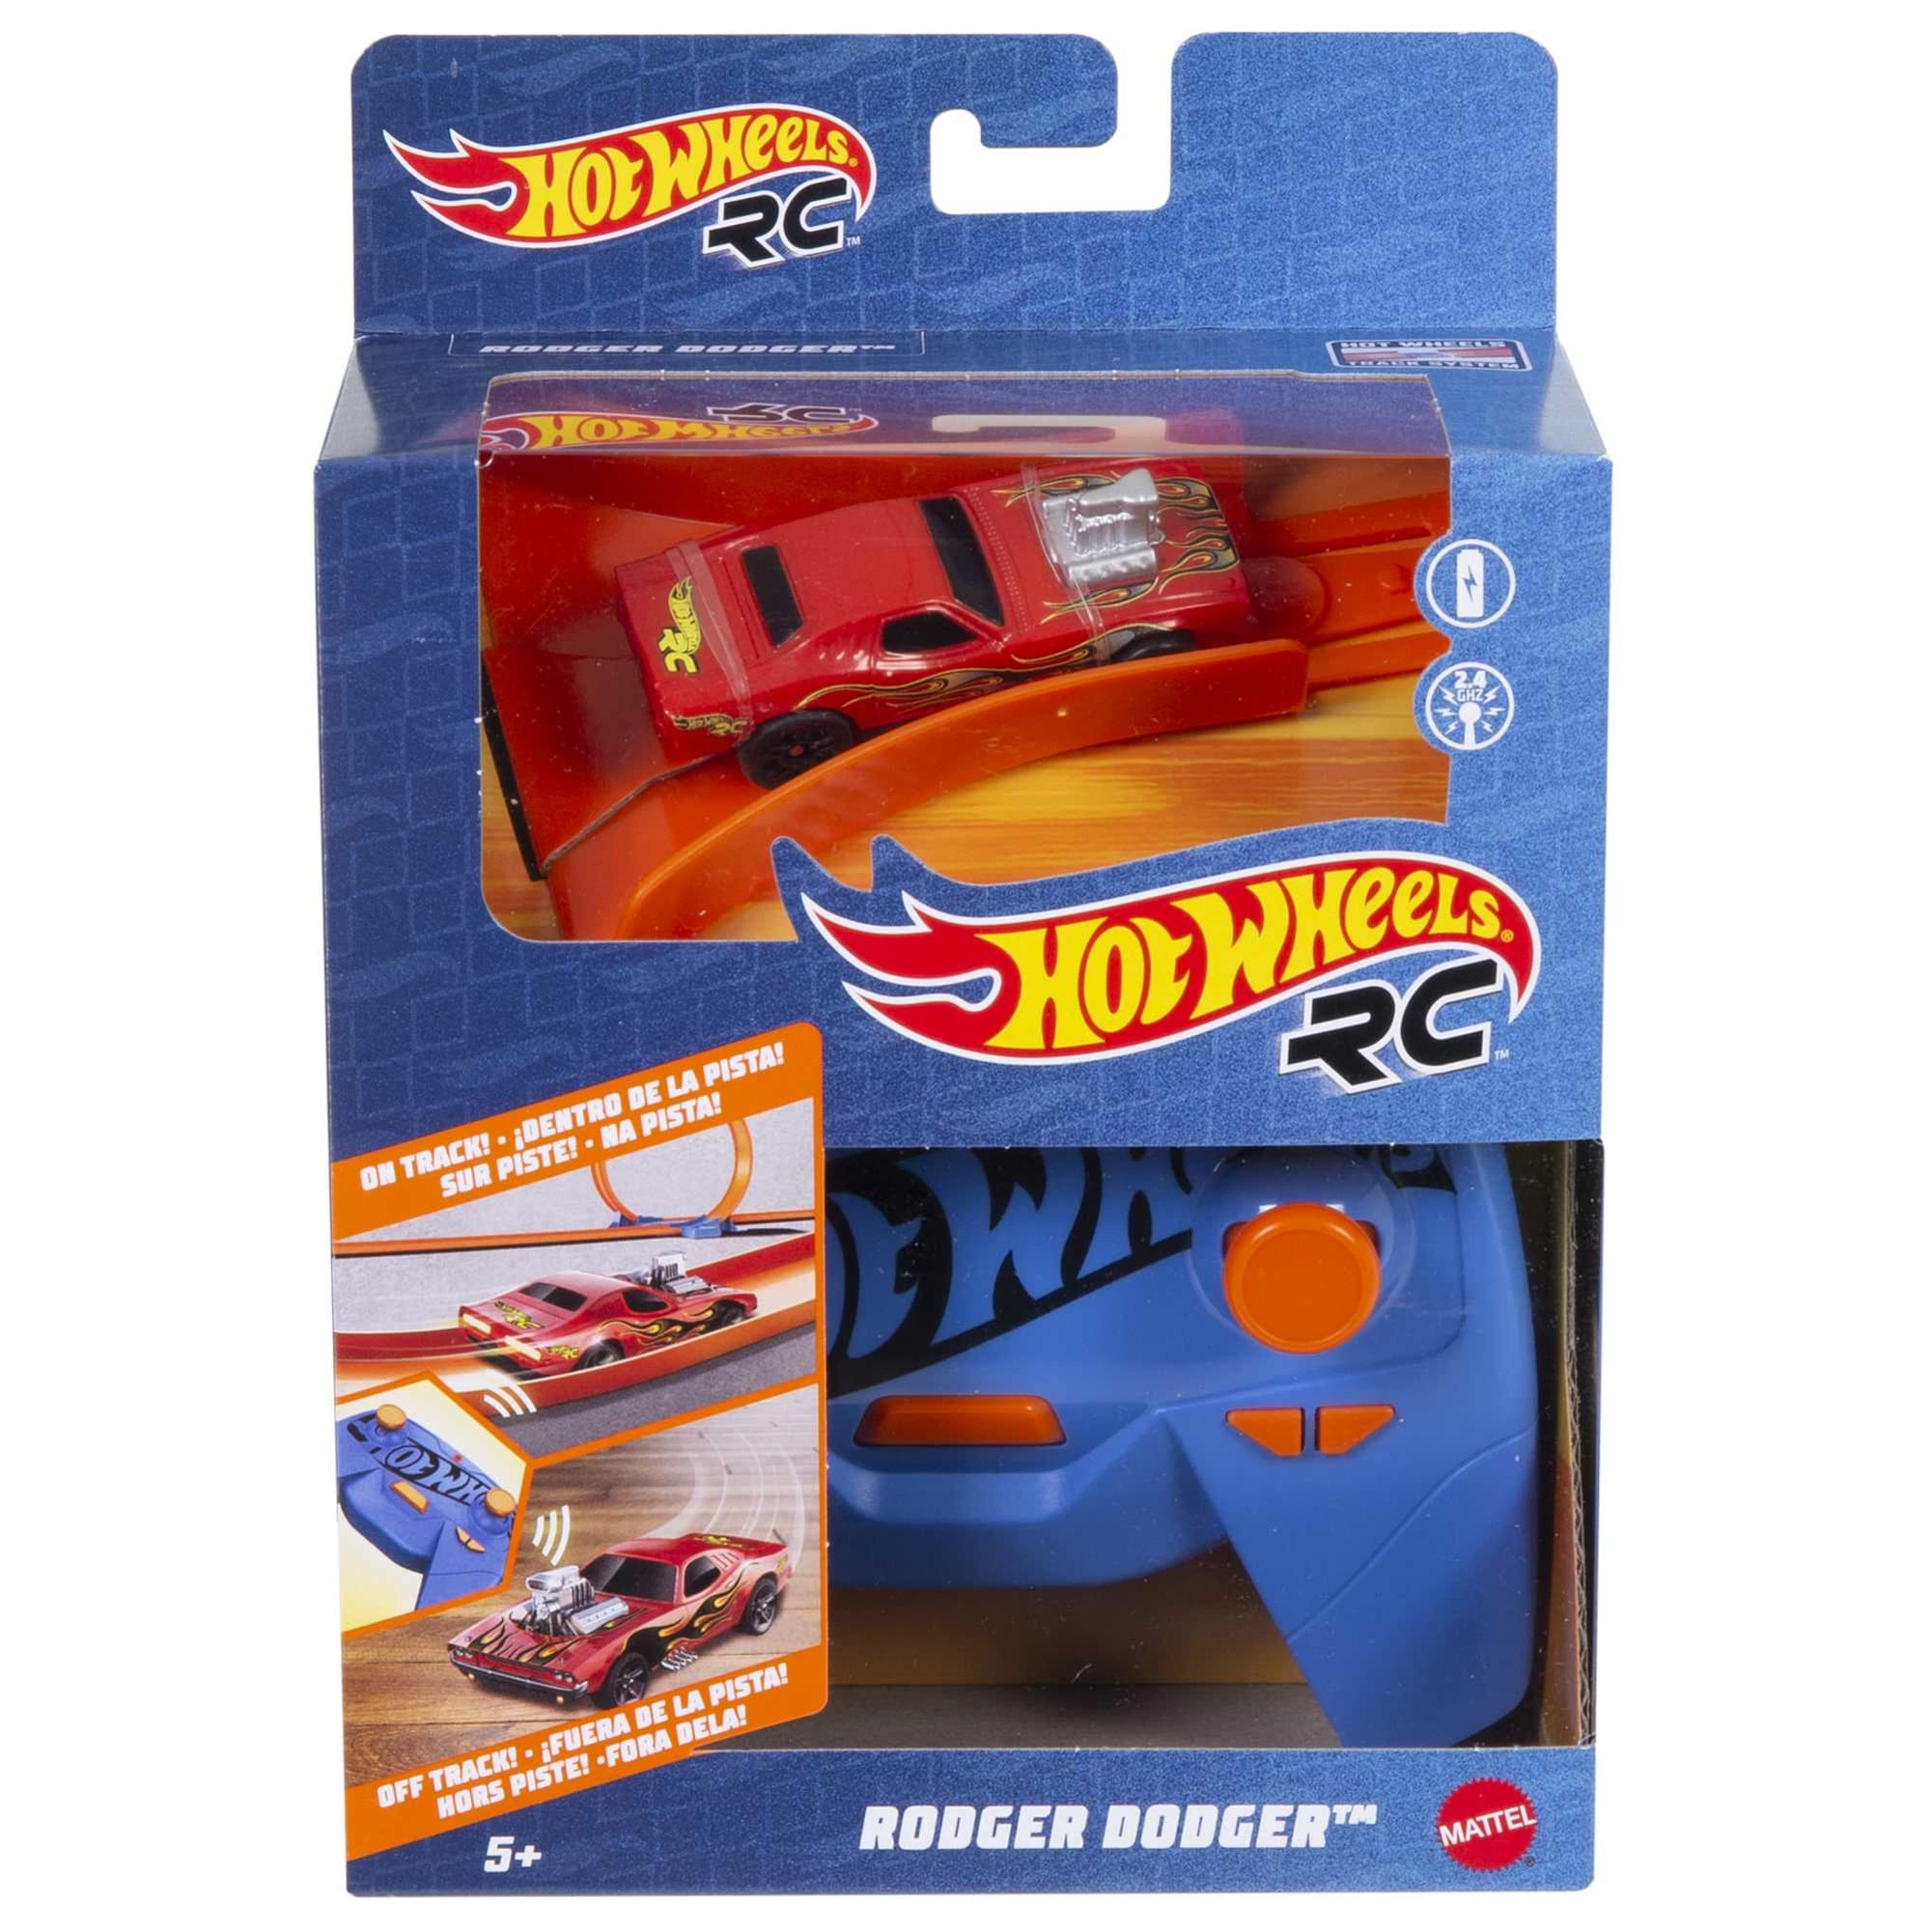 Hot Wheels Rc Rodger Dodger | GWB73 | MATTEL GB